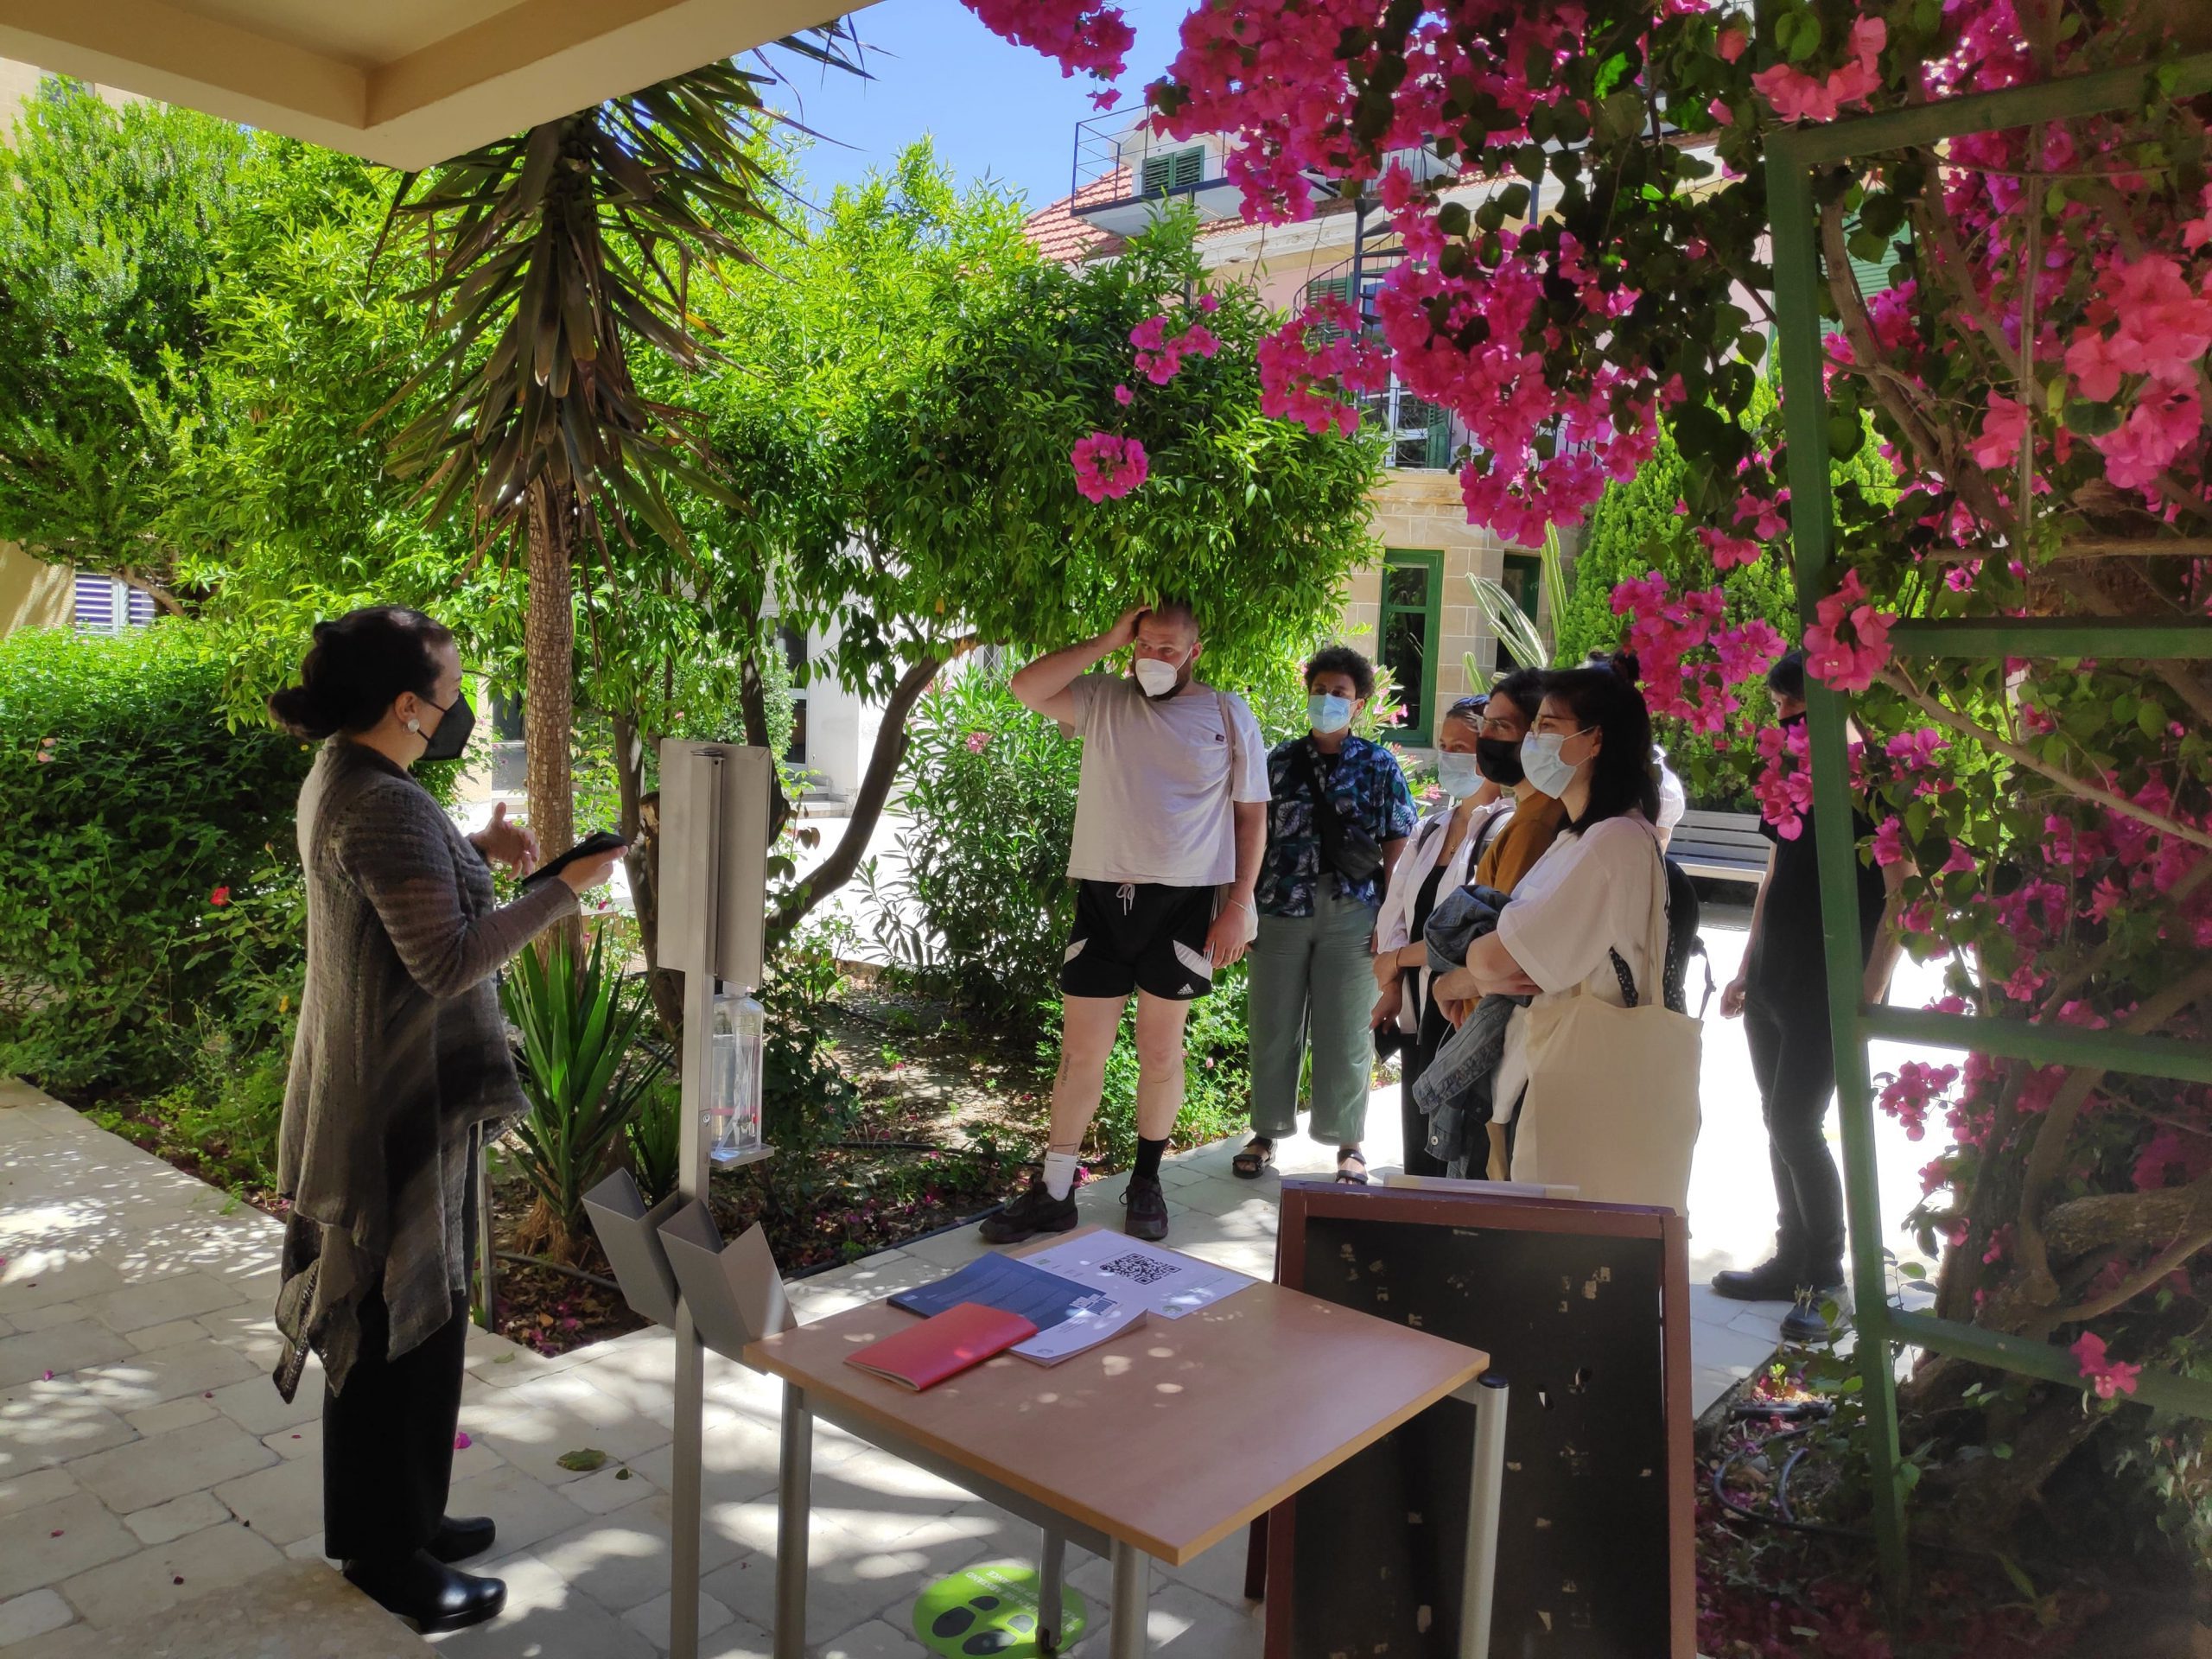 Caravan Residency program at Alexandria – Discovering the residence in Nicosia